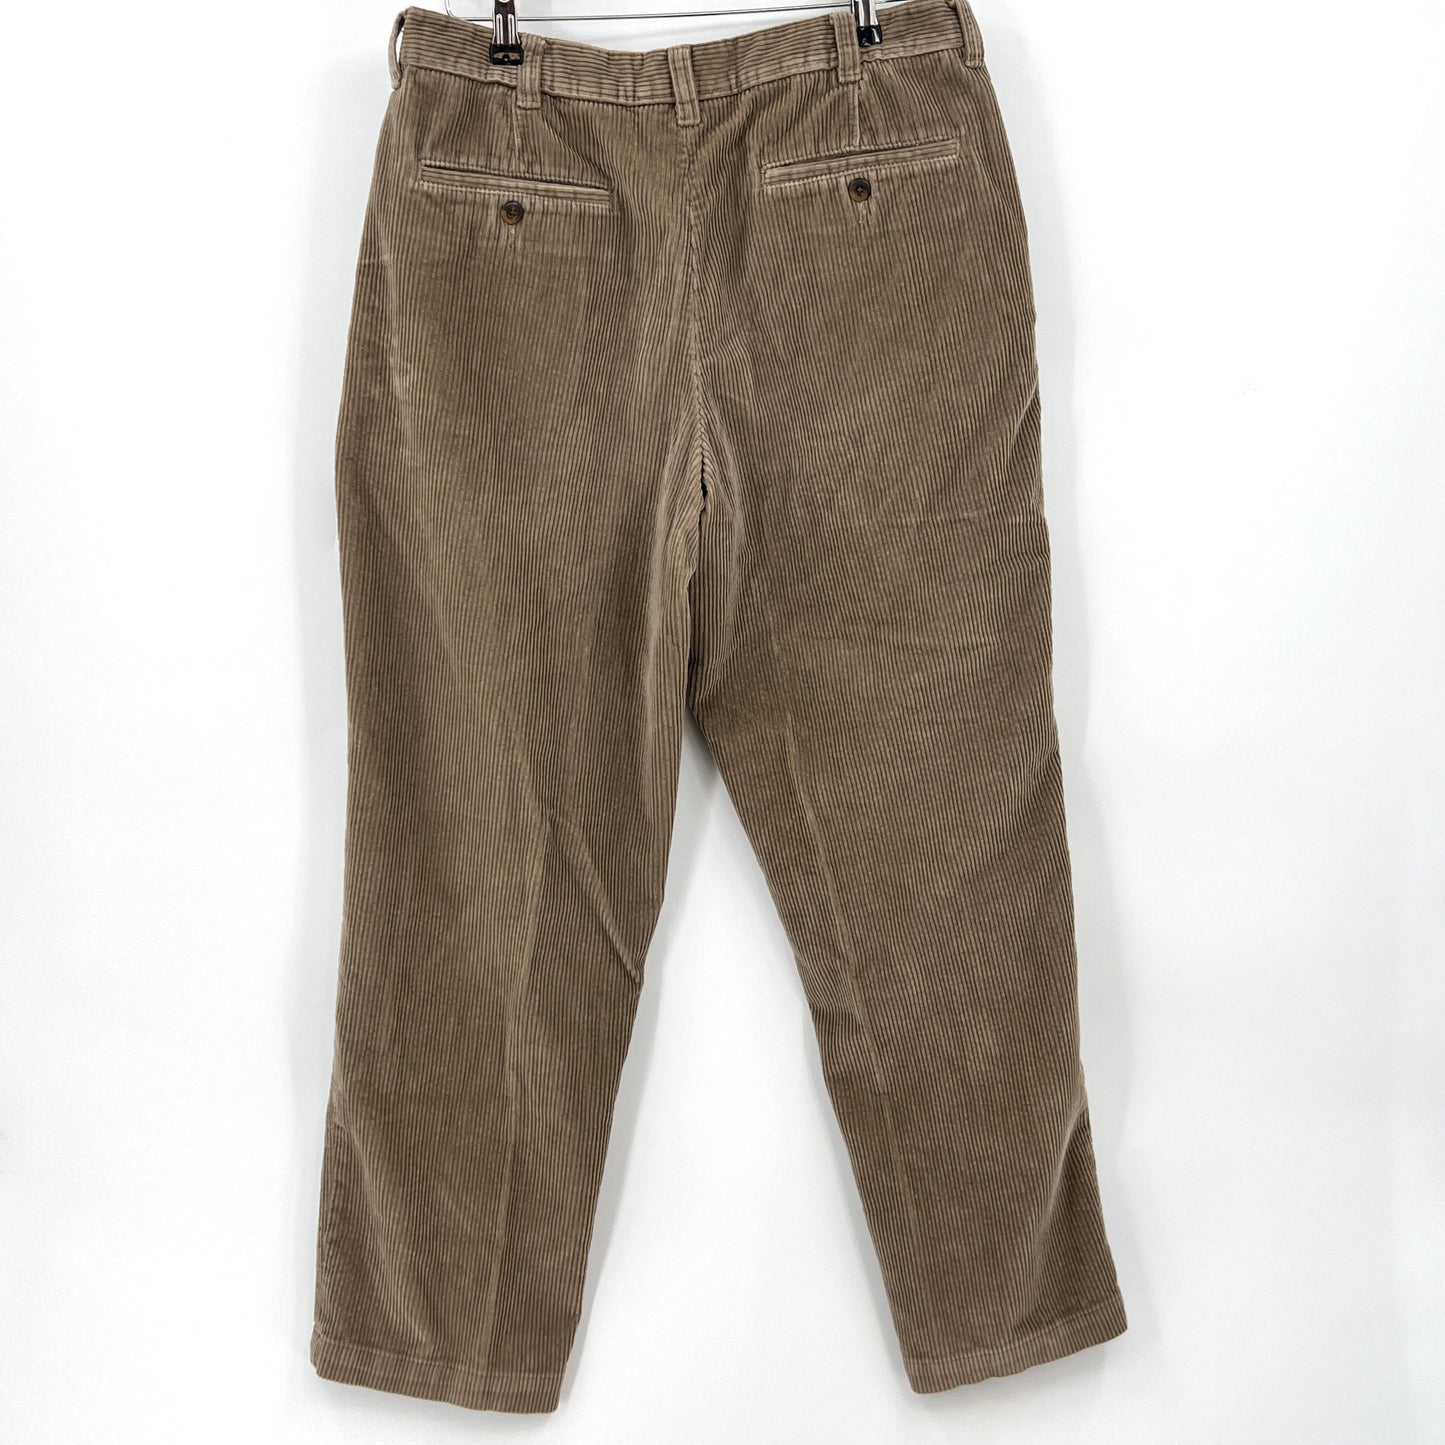 SOLD - Vintage Corduroy Pants 34x32